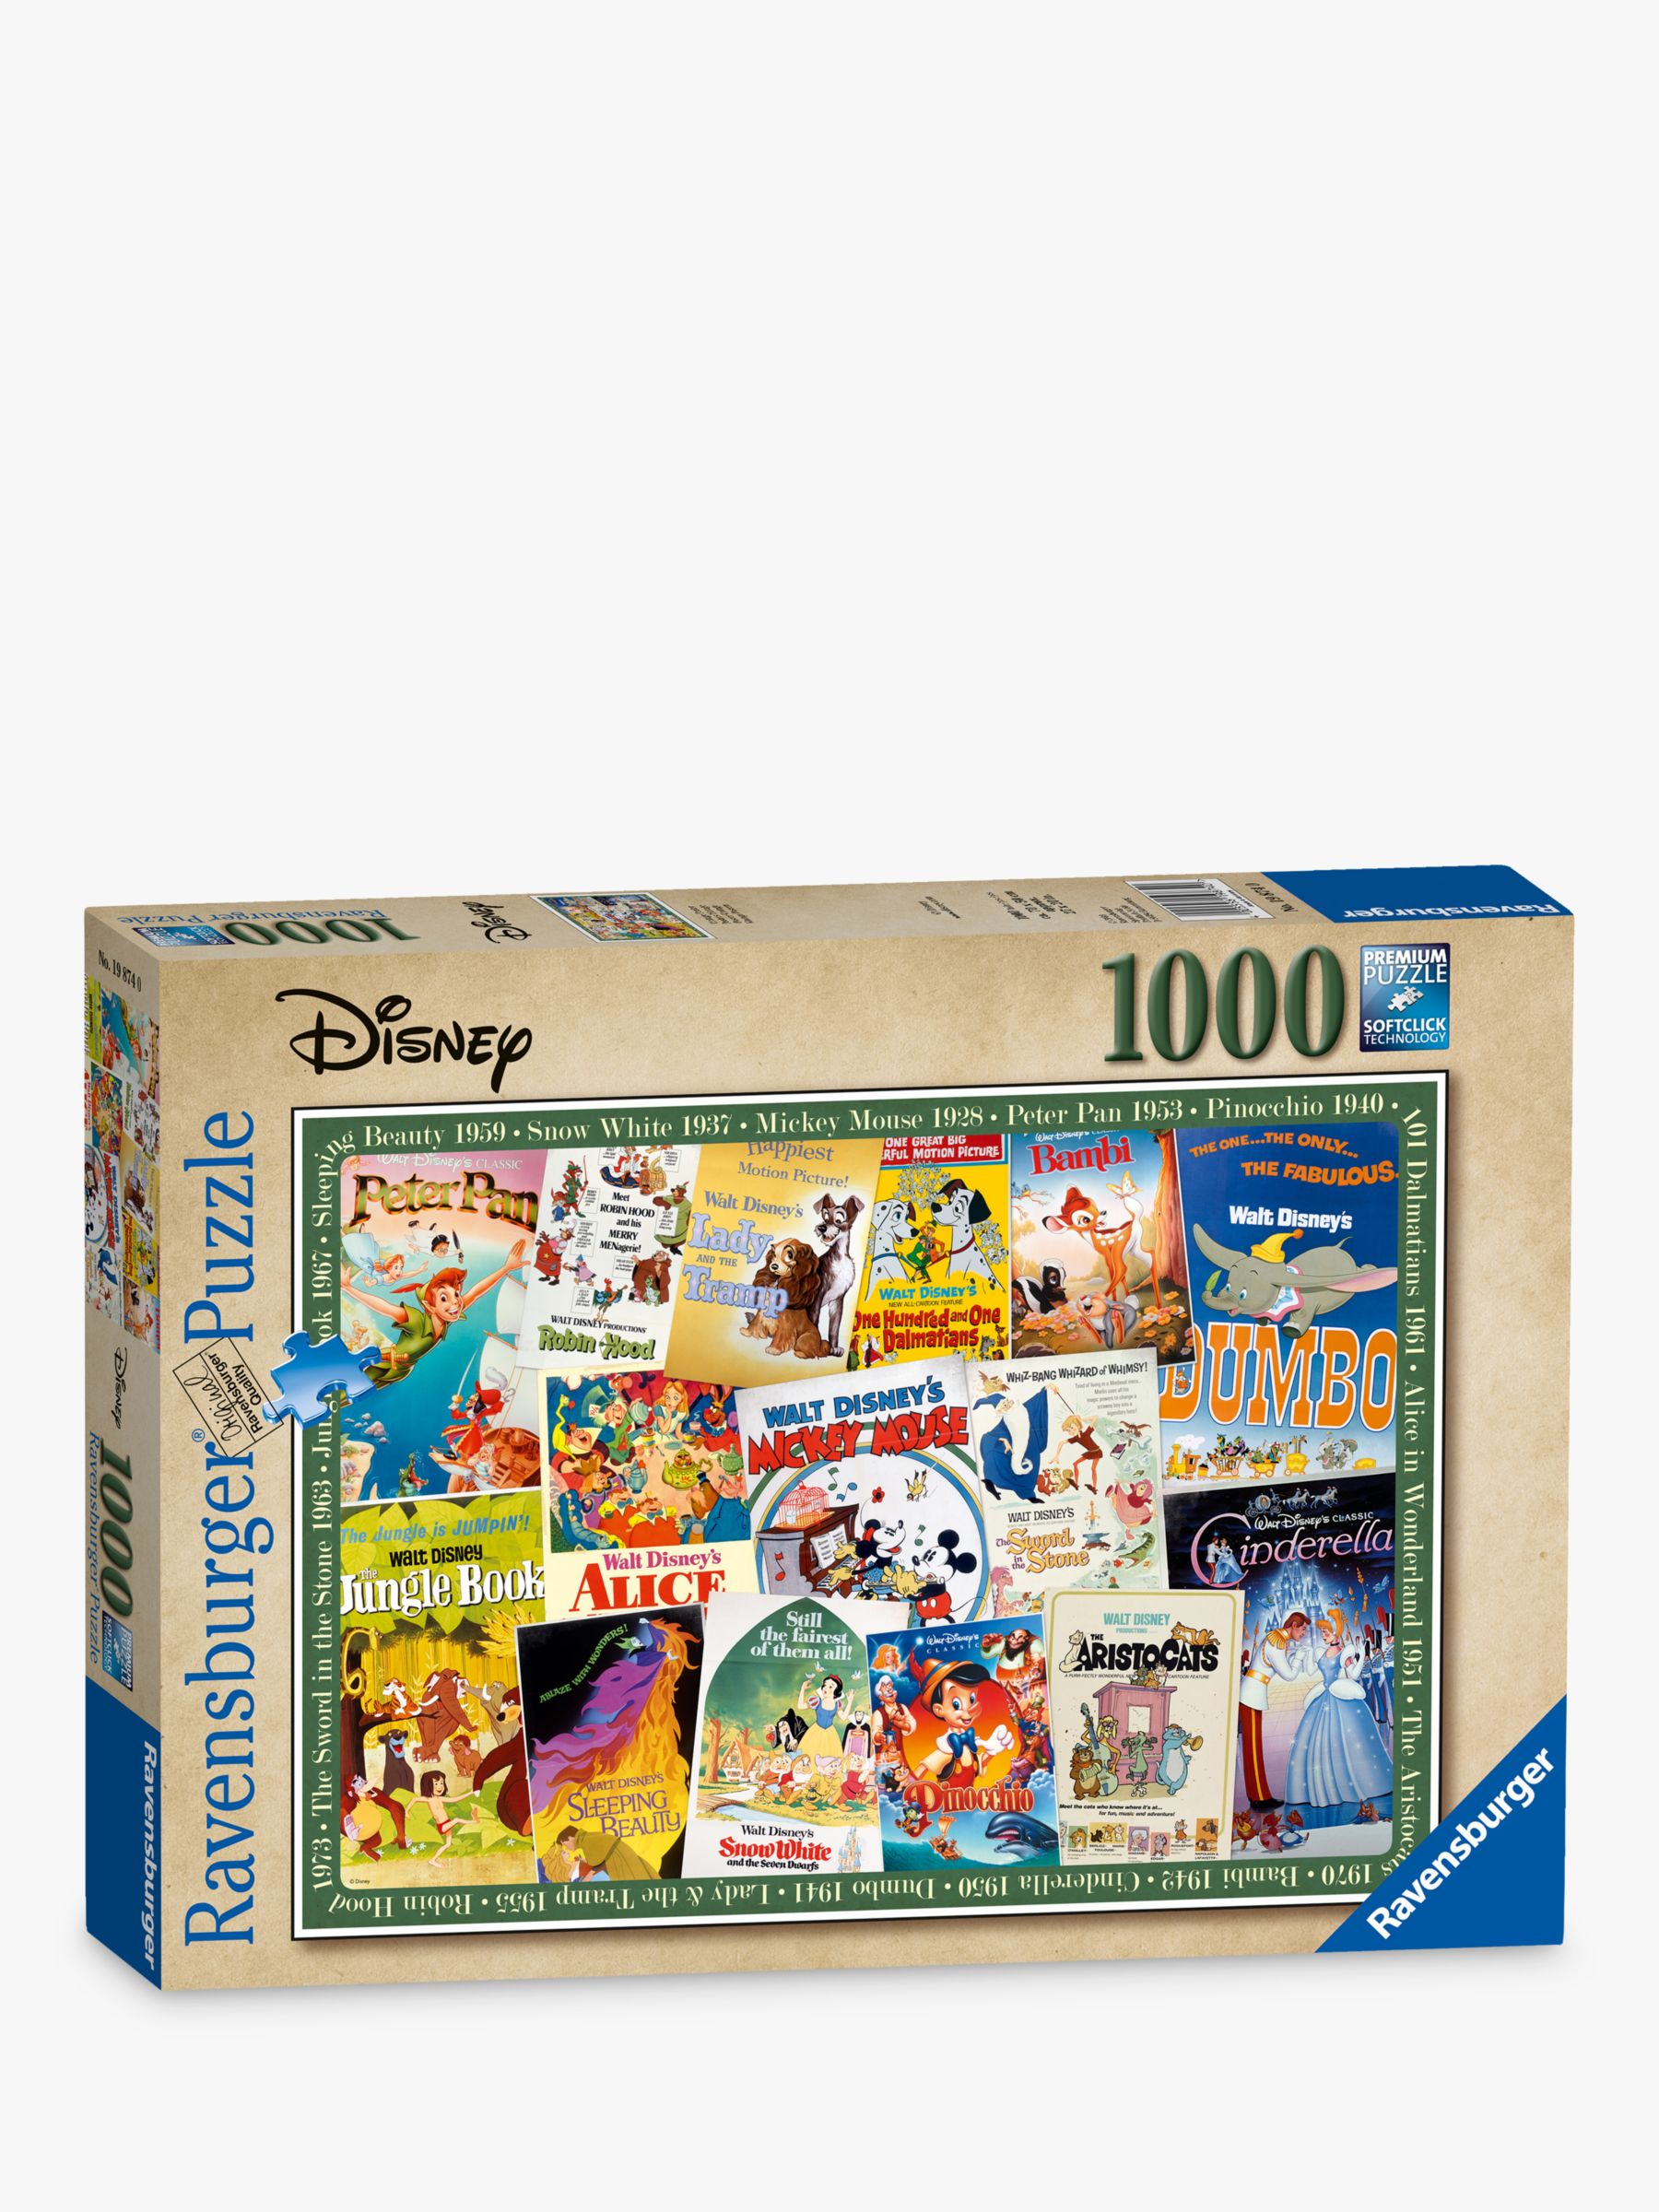 Ravensburger The Storybook Disney 1500 Pieces Puzzle Multicolor